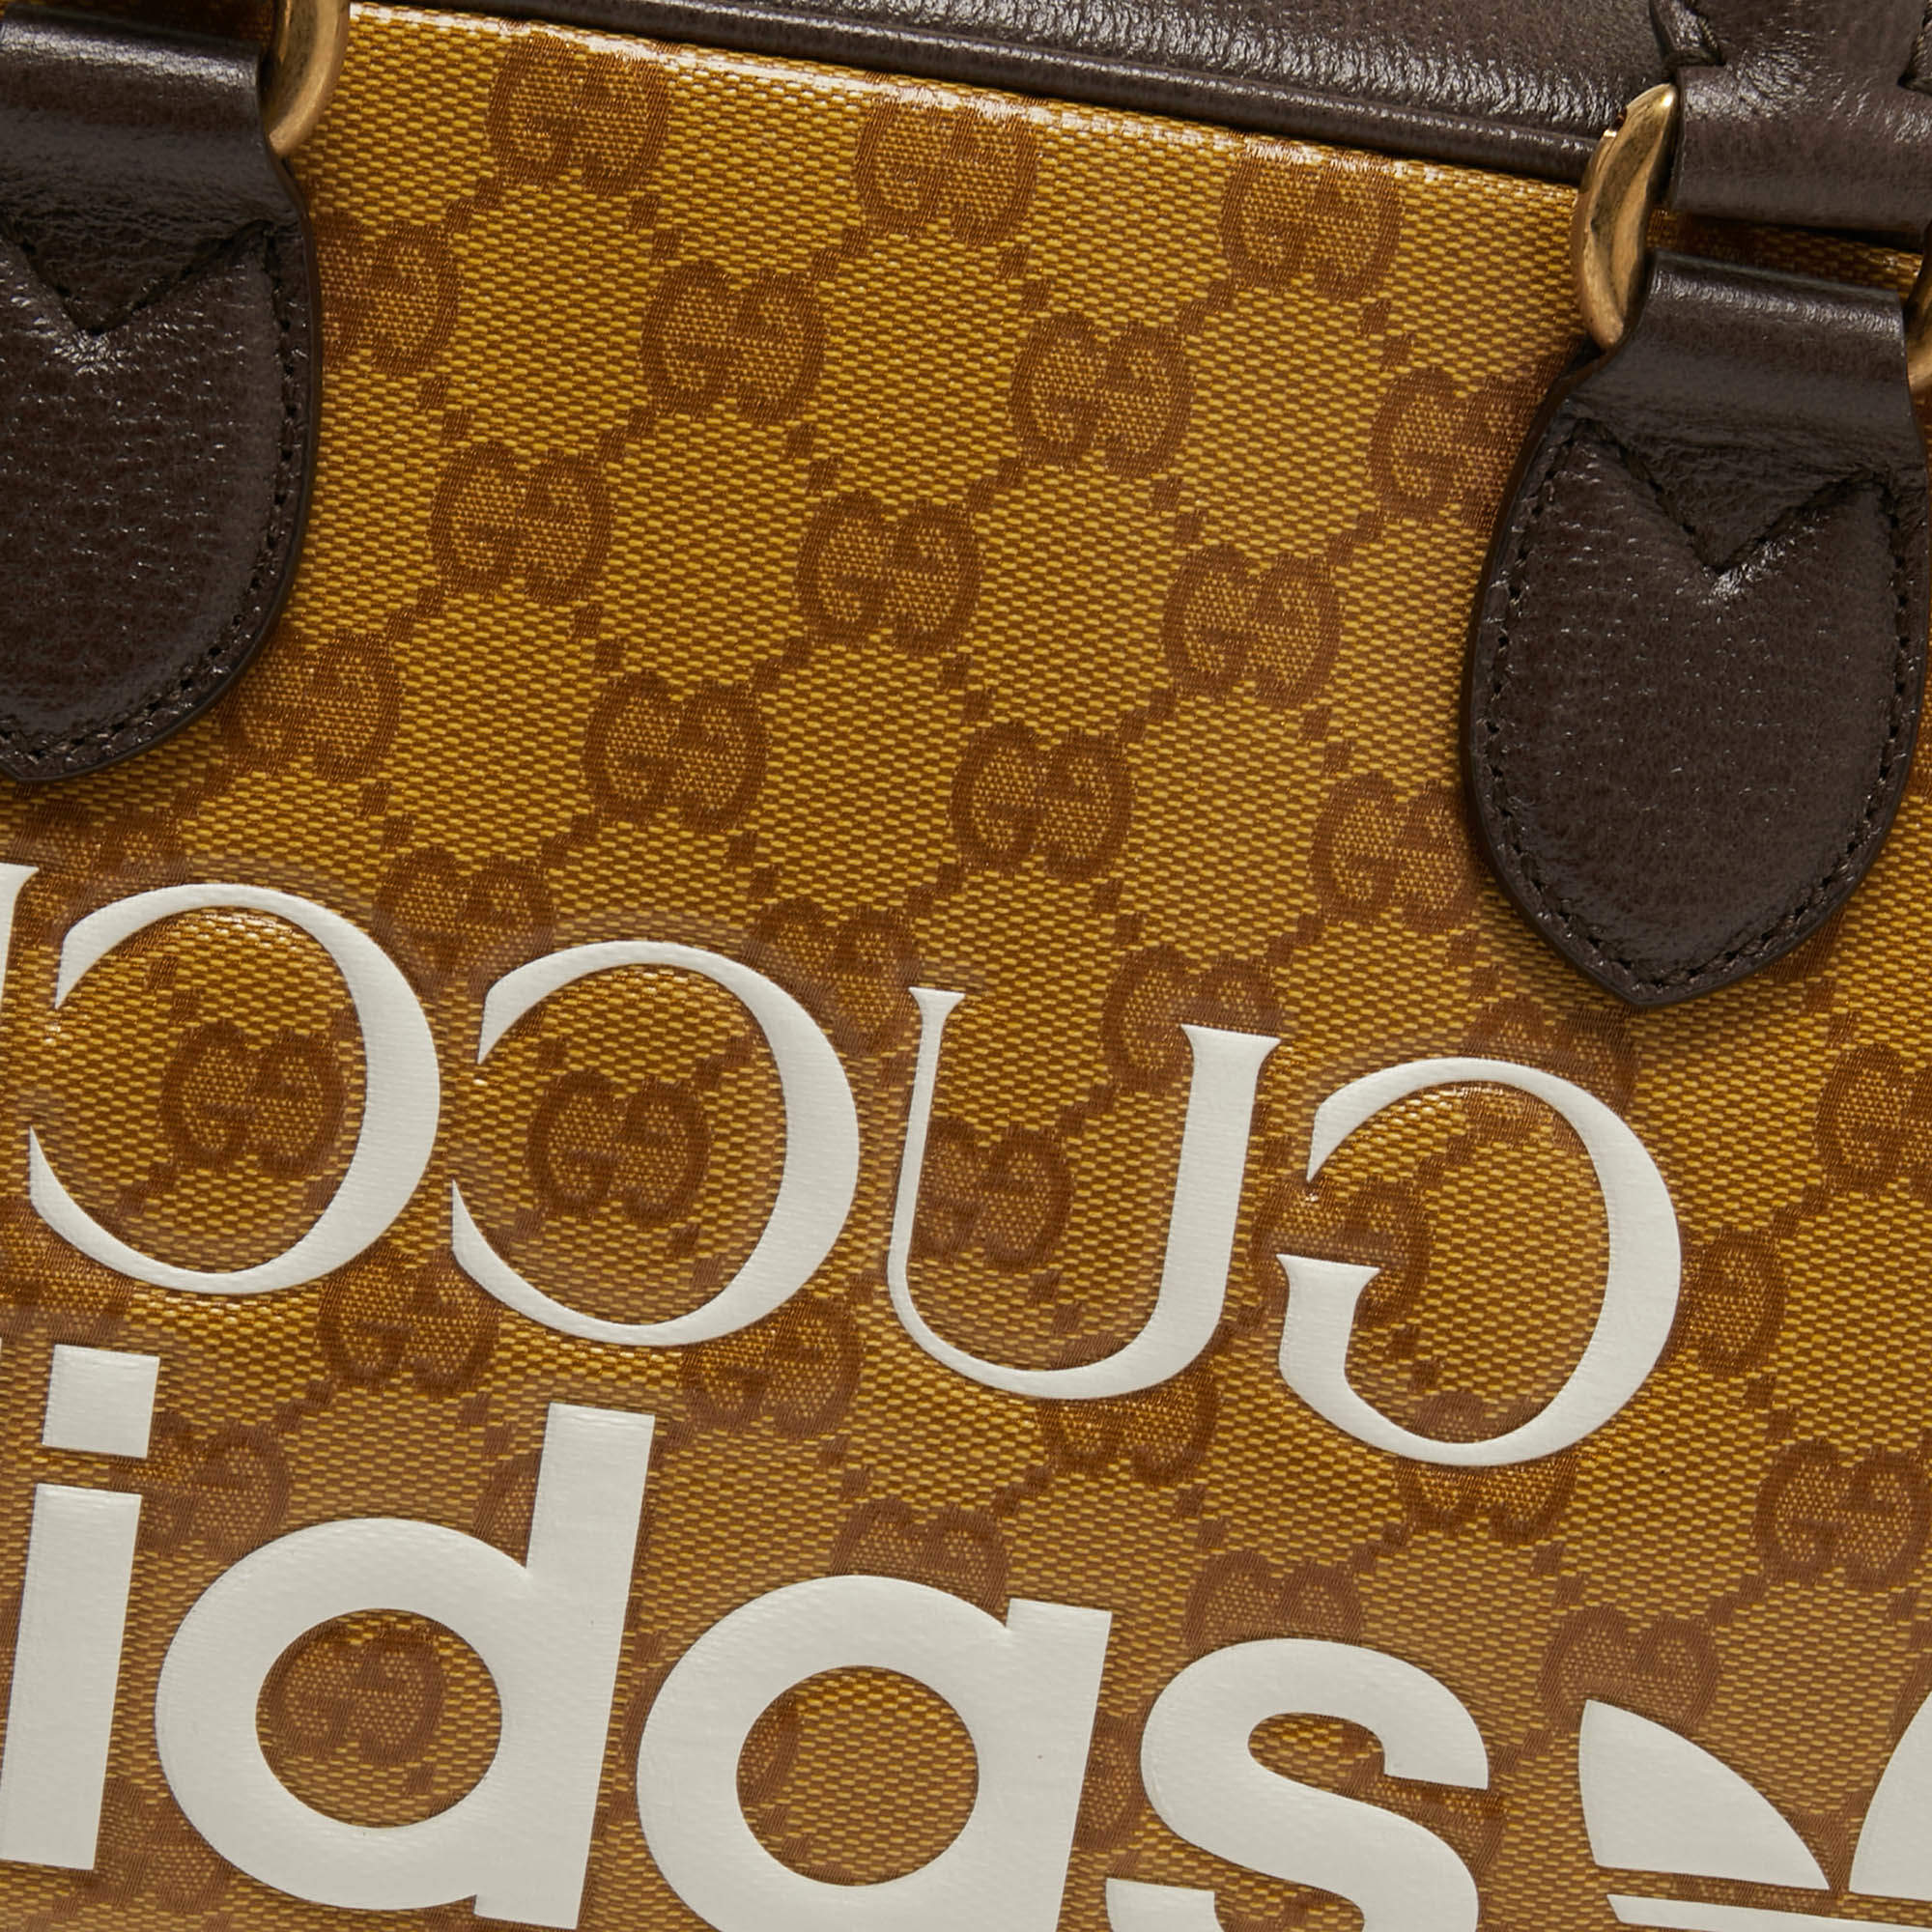 Gucci x adidas Mini Duffle Bag Beige/BrownGucci x adidas Mini